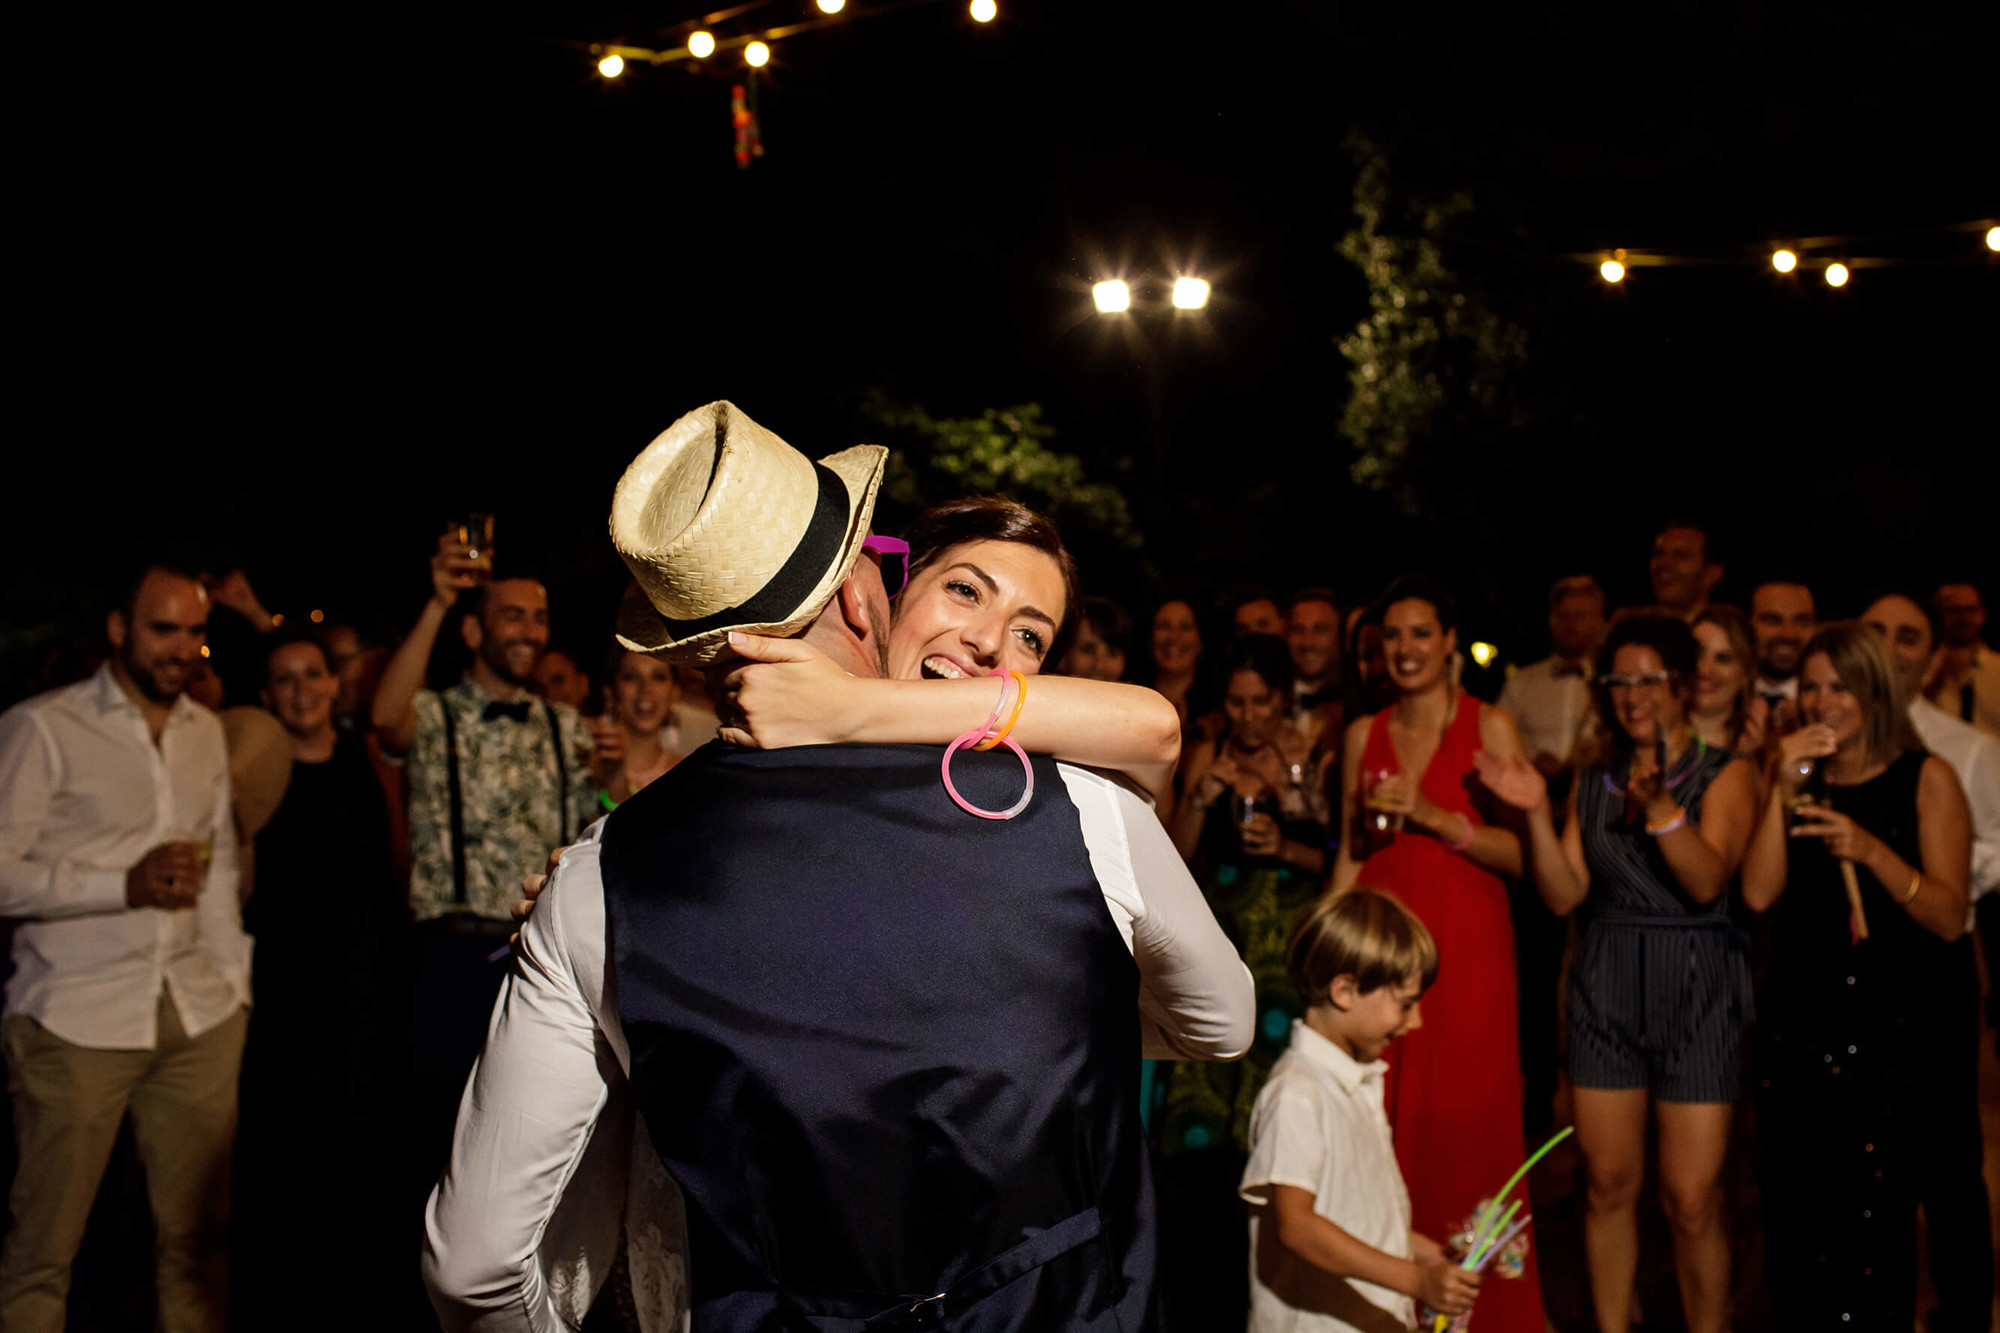 Nou Enfoc fotògrafs de boda de Vilafranca del Penedès a Barcelona - boda-joan-sarda-jic47.jpg